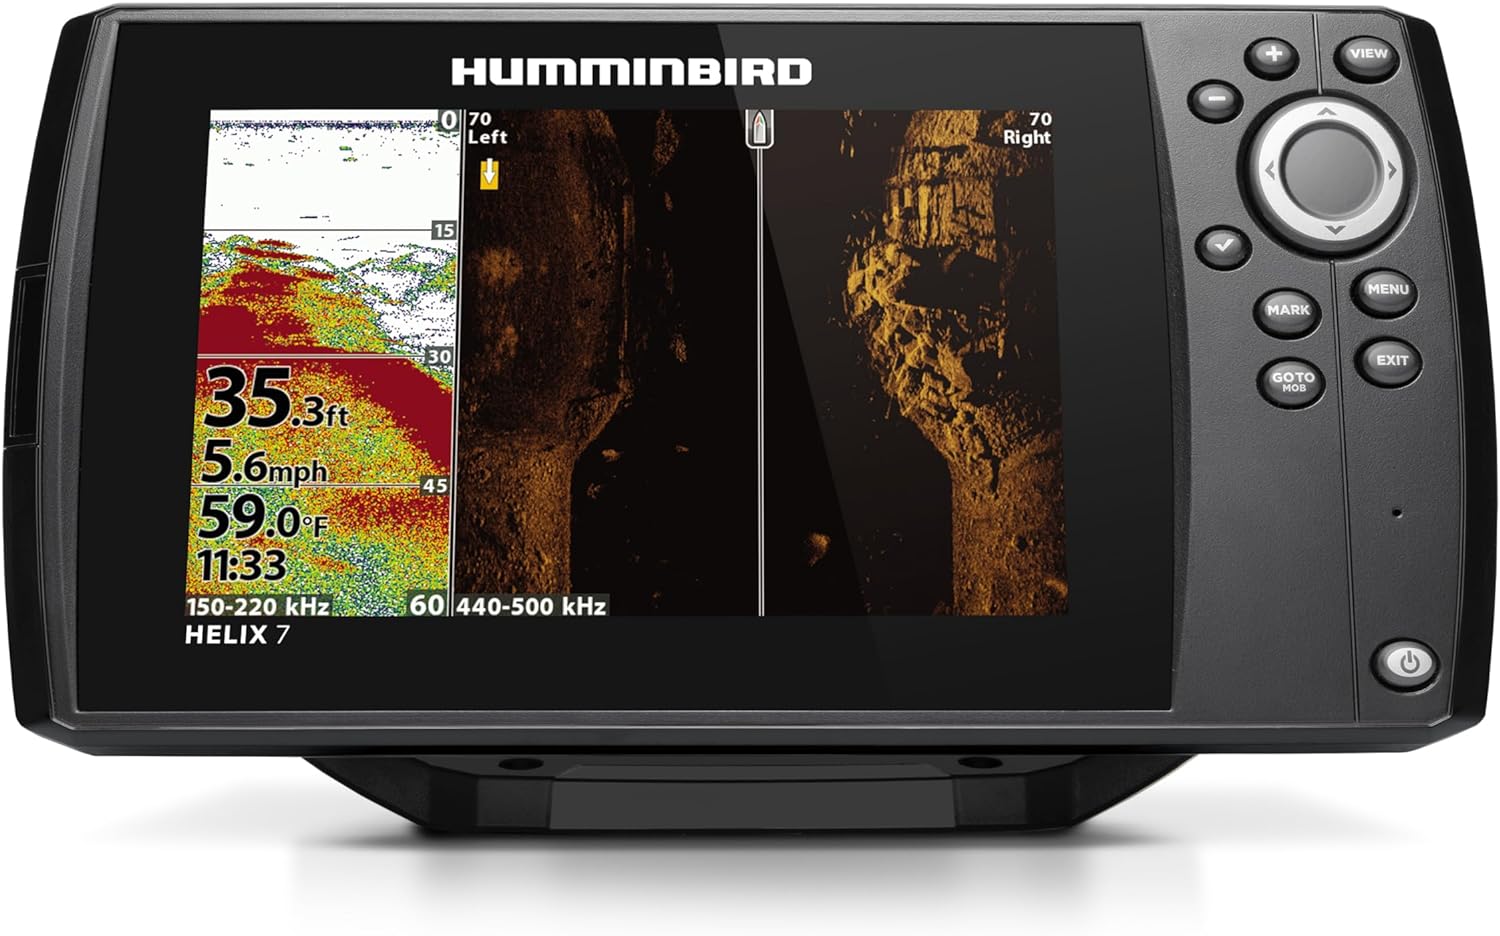 Humminbird 411590-1 Helix 7 Chirp SI GPS G4 - Humminbird 411590-1 Helix 7 Chirp SI GPS G4 Review